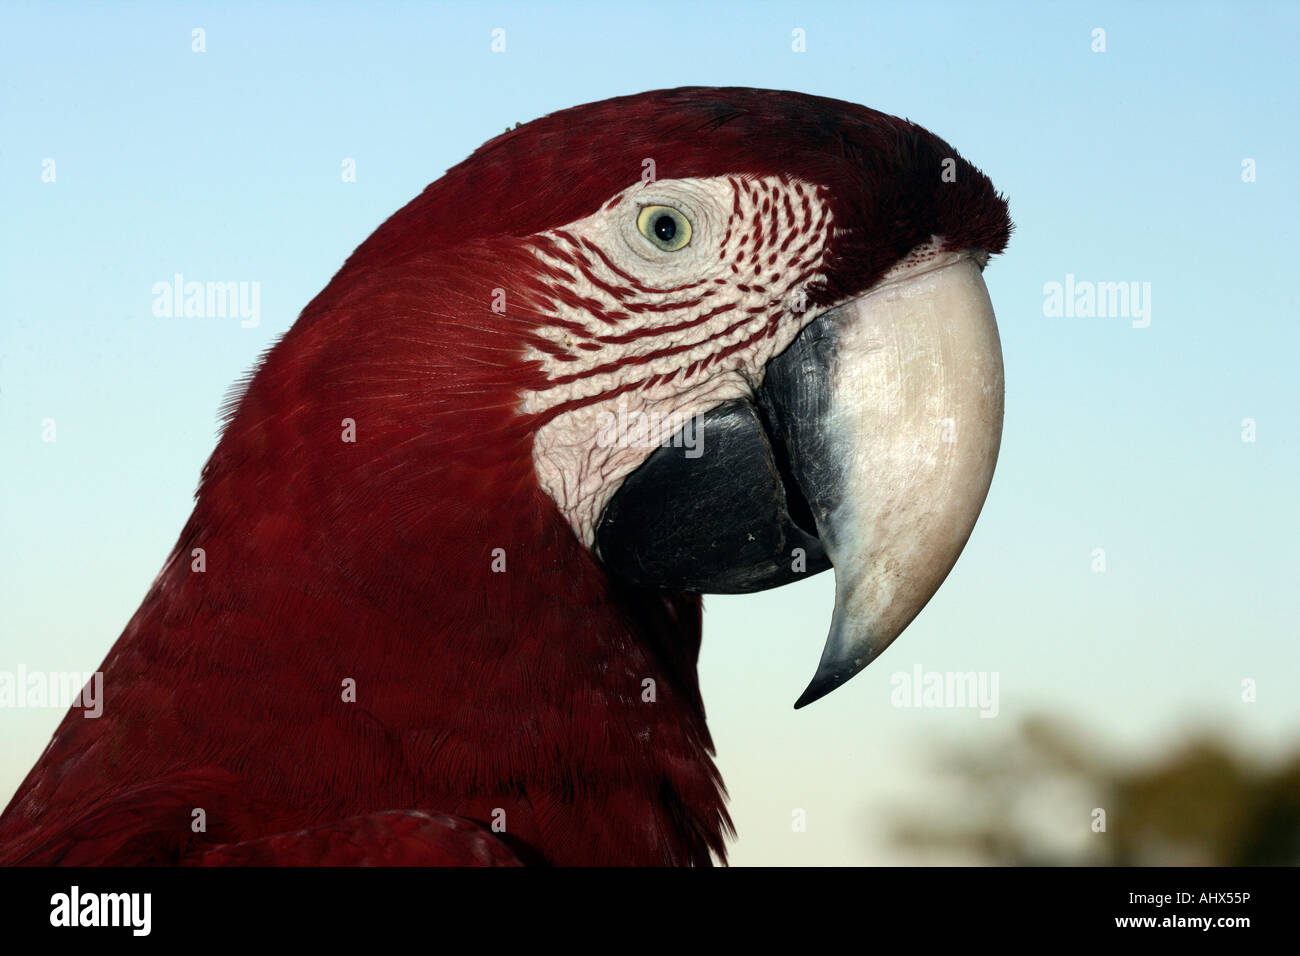 Red and green macaw Ara chloropterus Brazil Stock Photo